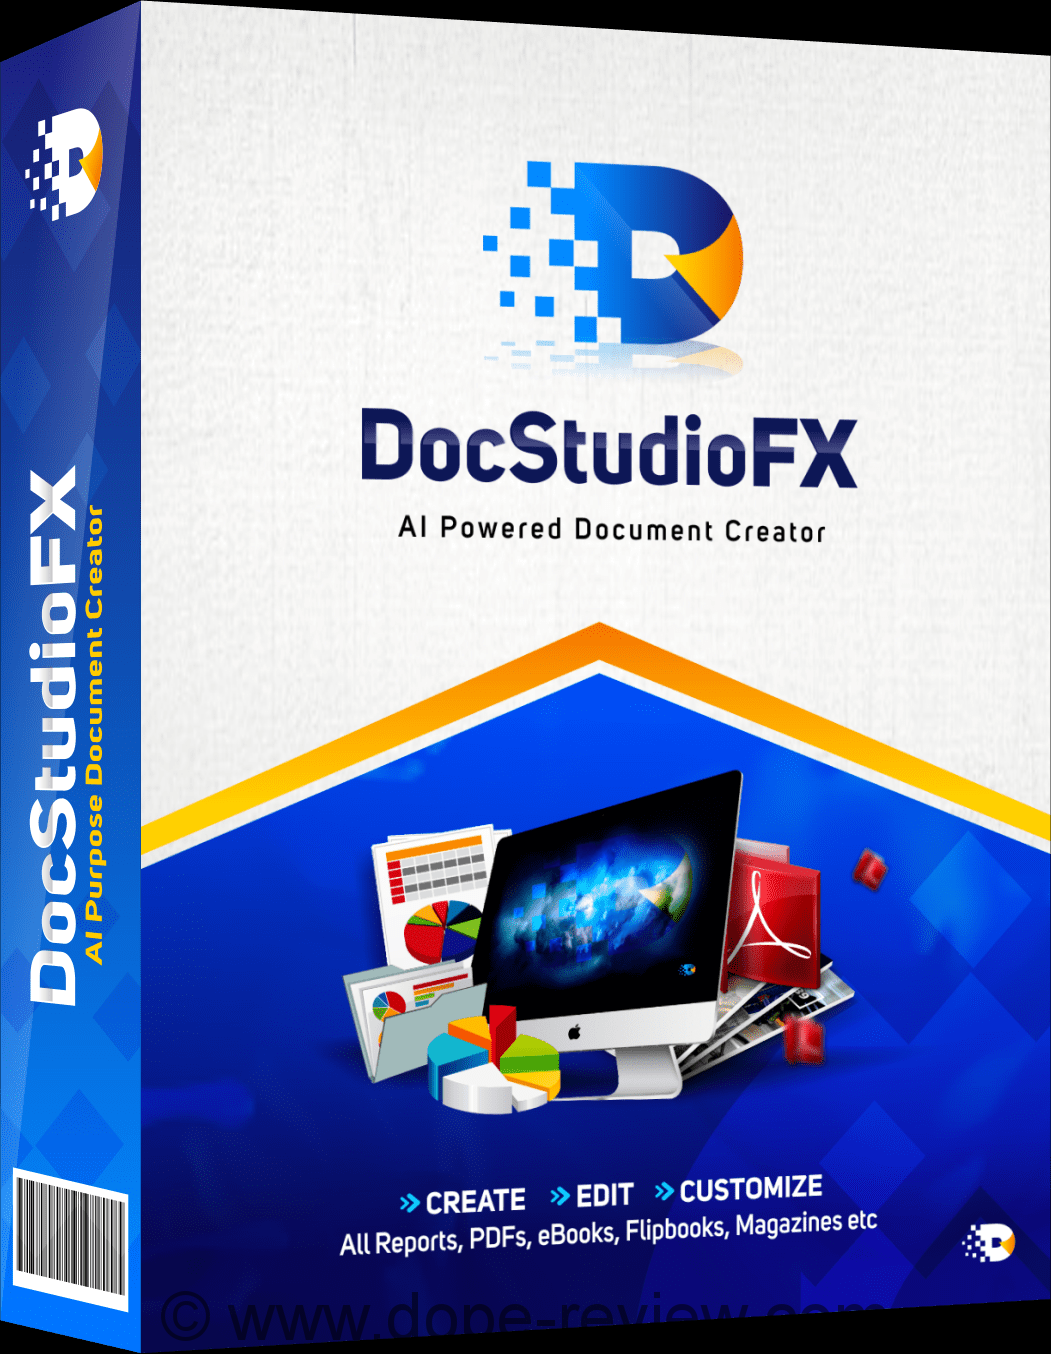 DocStudioFX